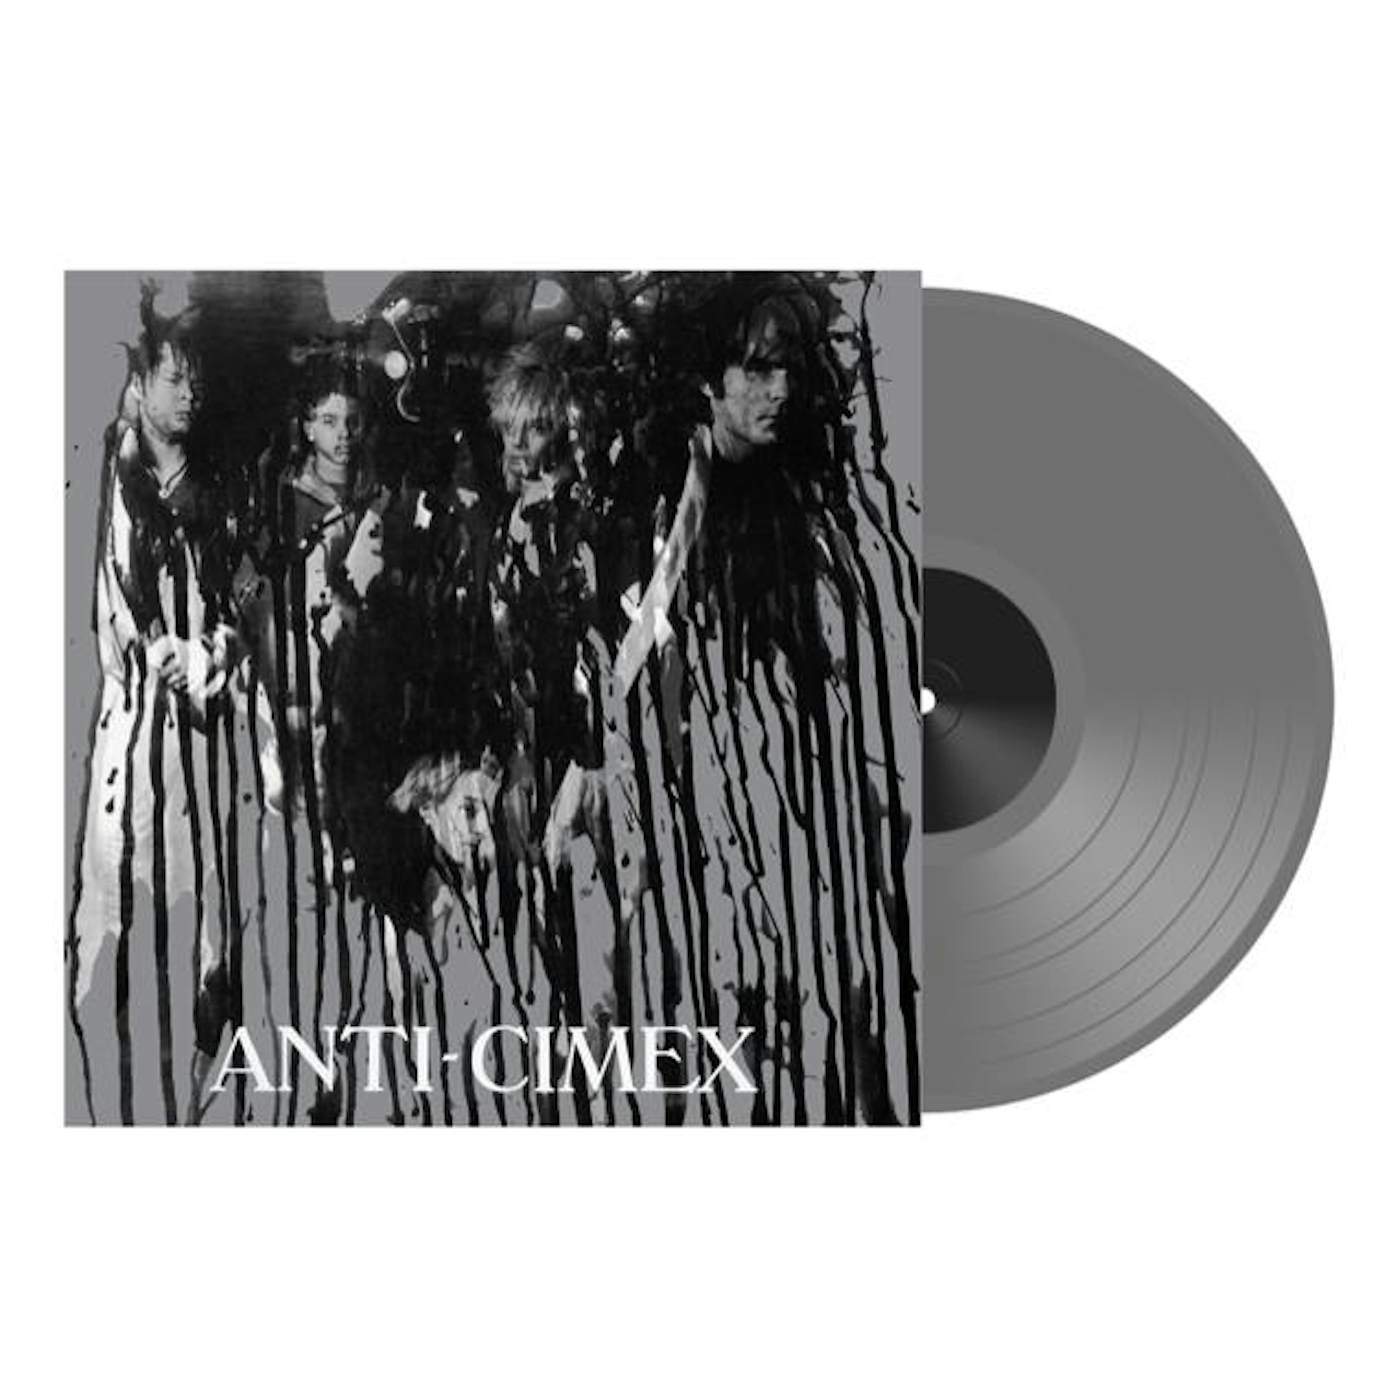 Anti Cimex Vinyl Record